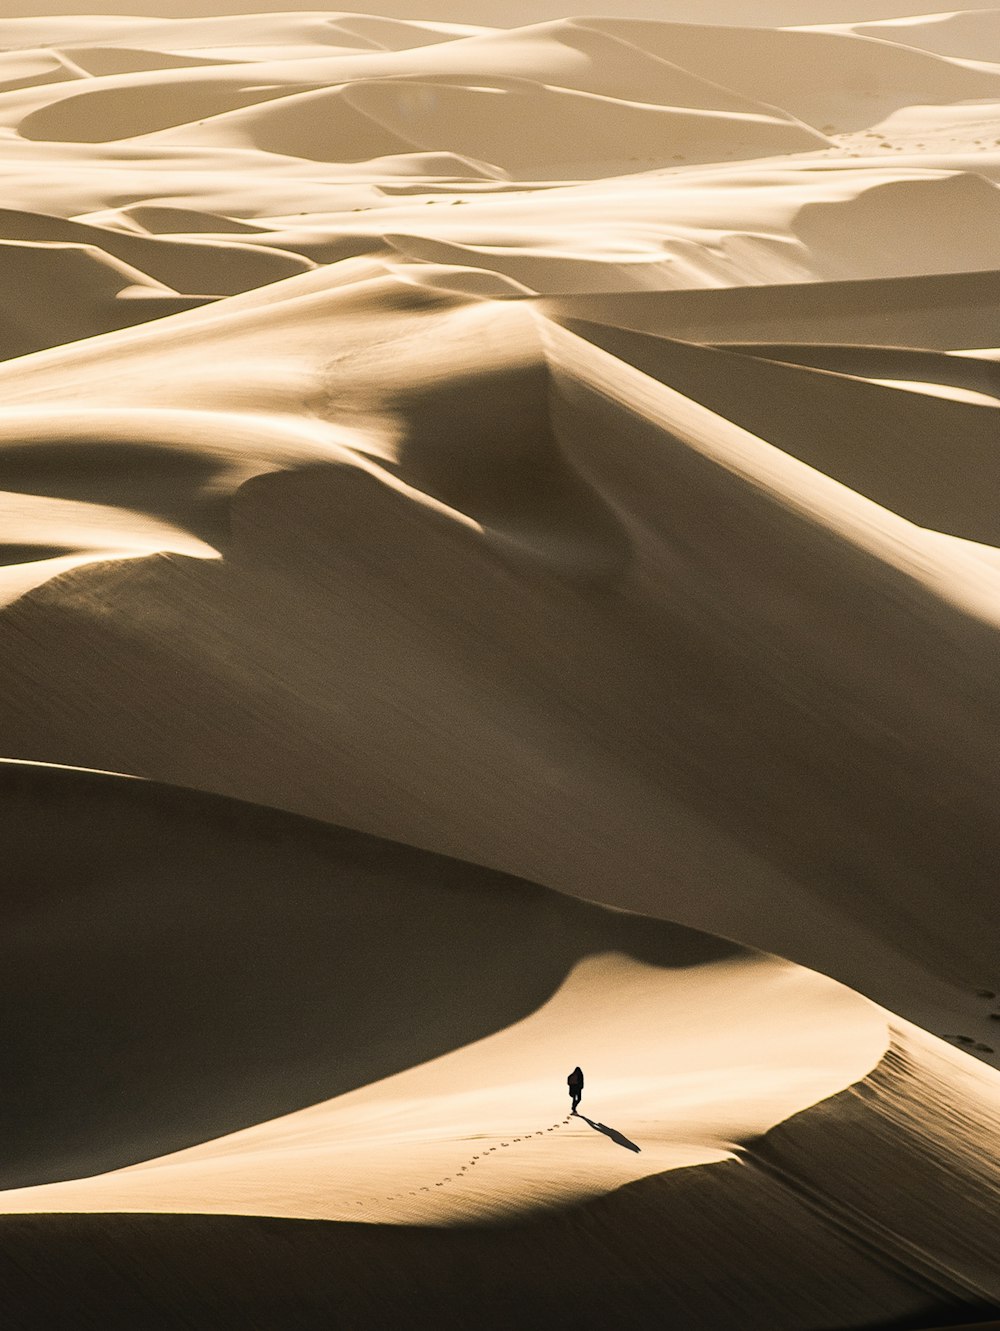 20+ Free Desert Pictures & Stock Photos on Unsplash